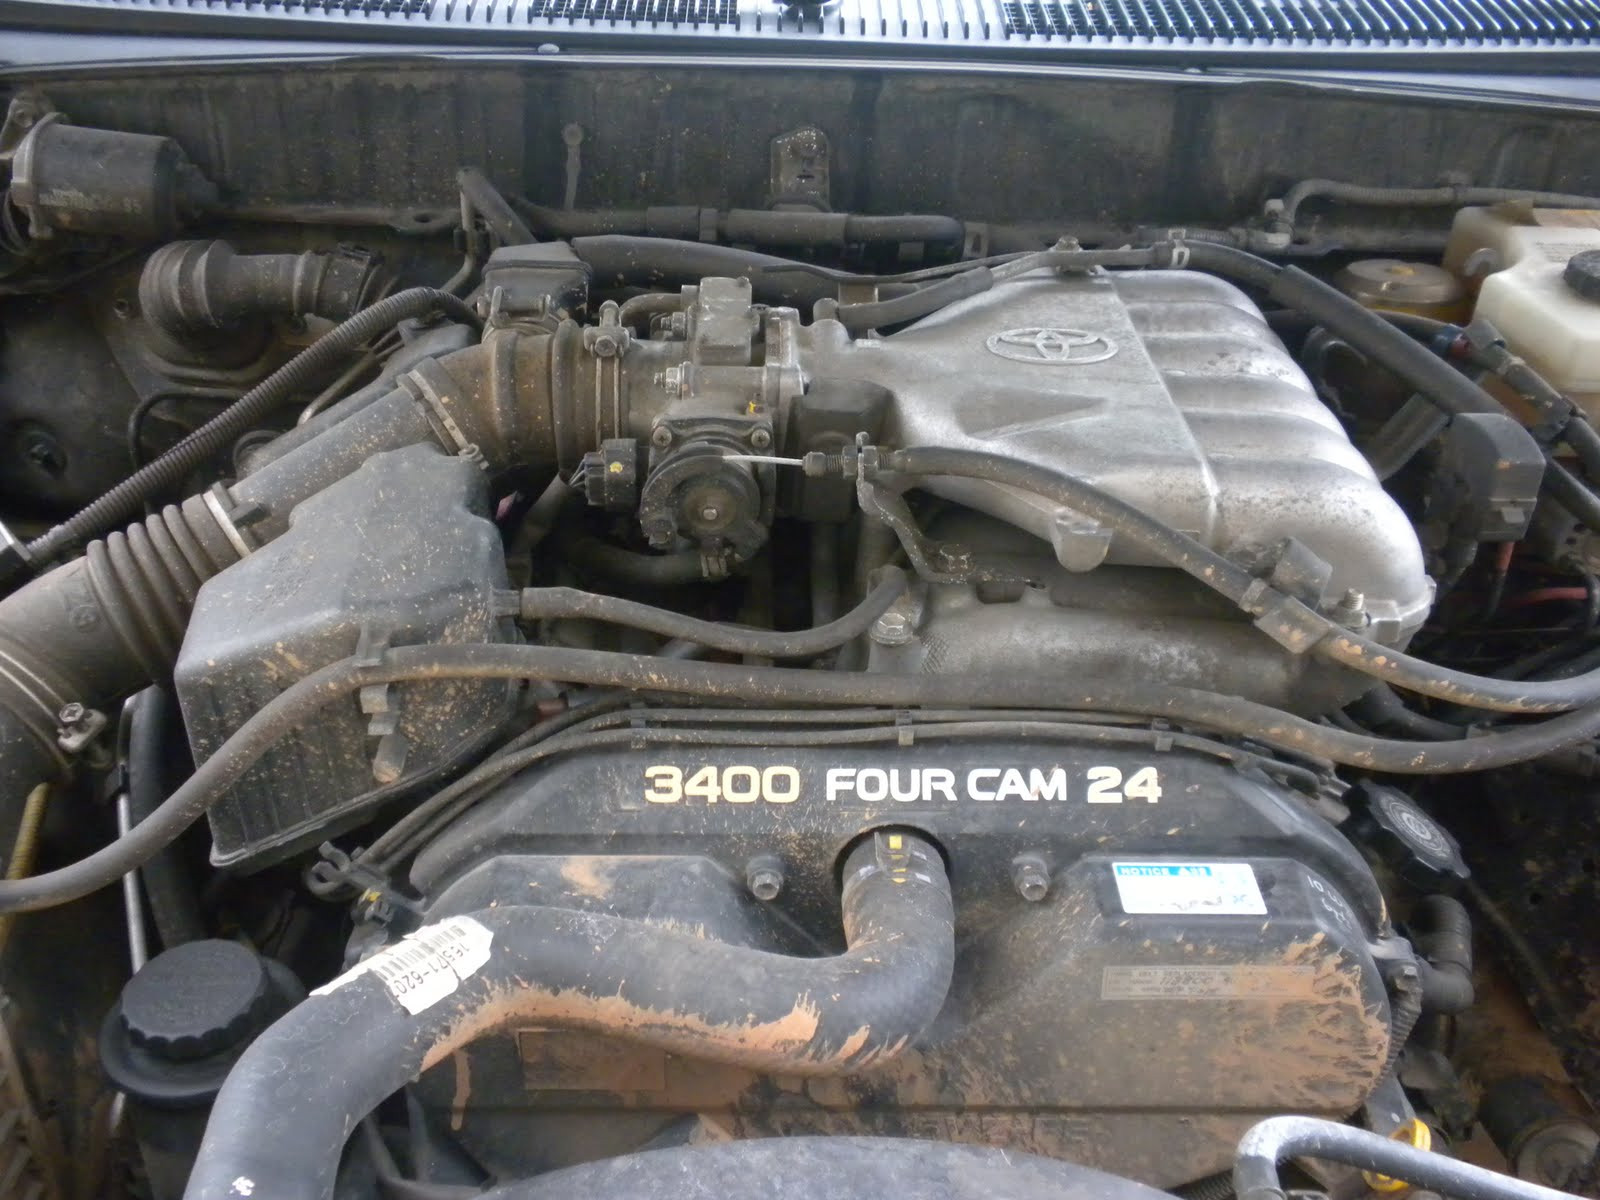 2000 toyota 4runner Engine Diagram My Car Battles: Spark Plug Wires On My 02' toyota 4runner 3.4 L V6.